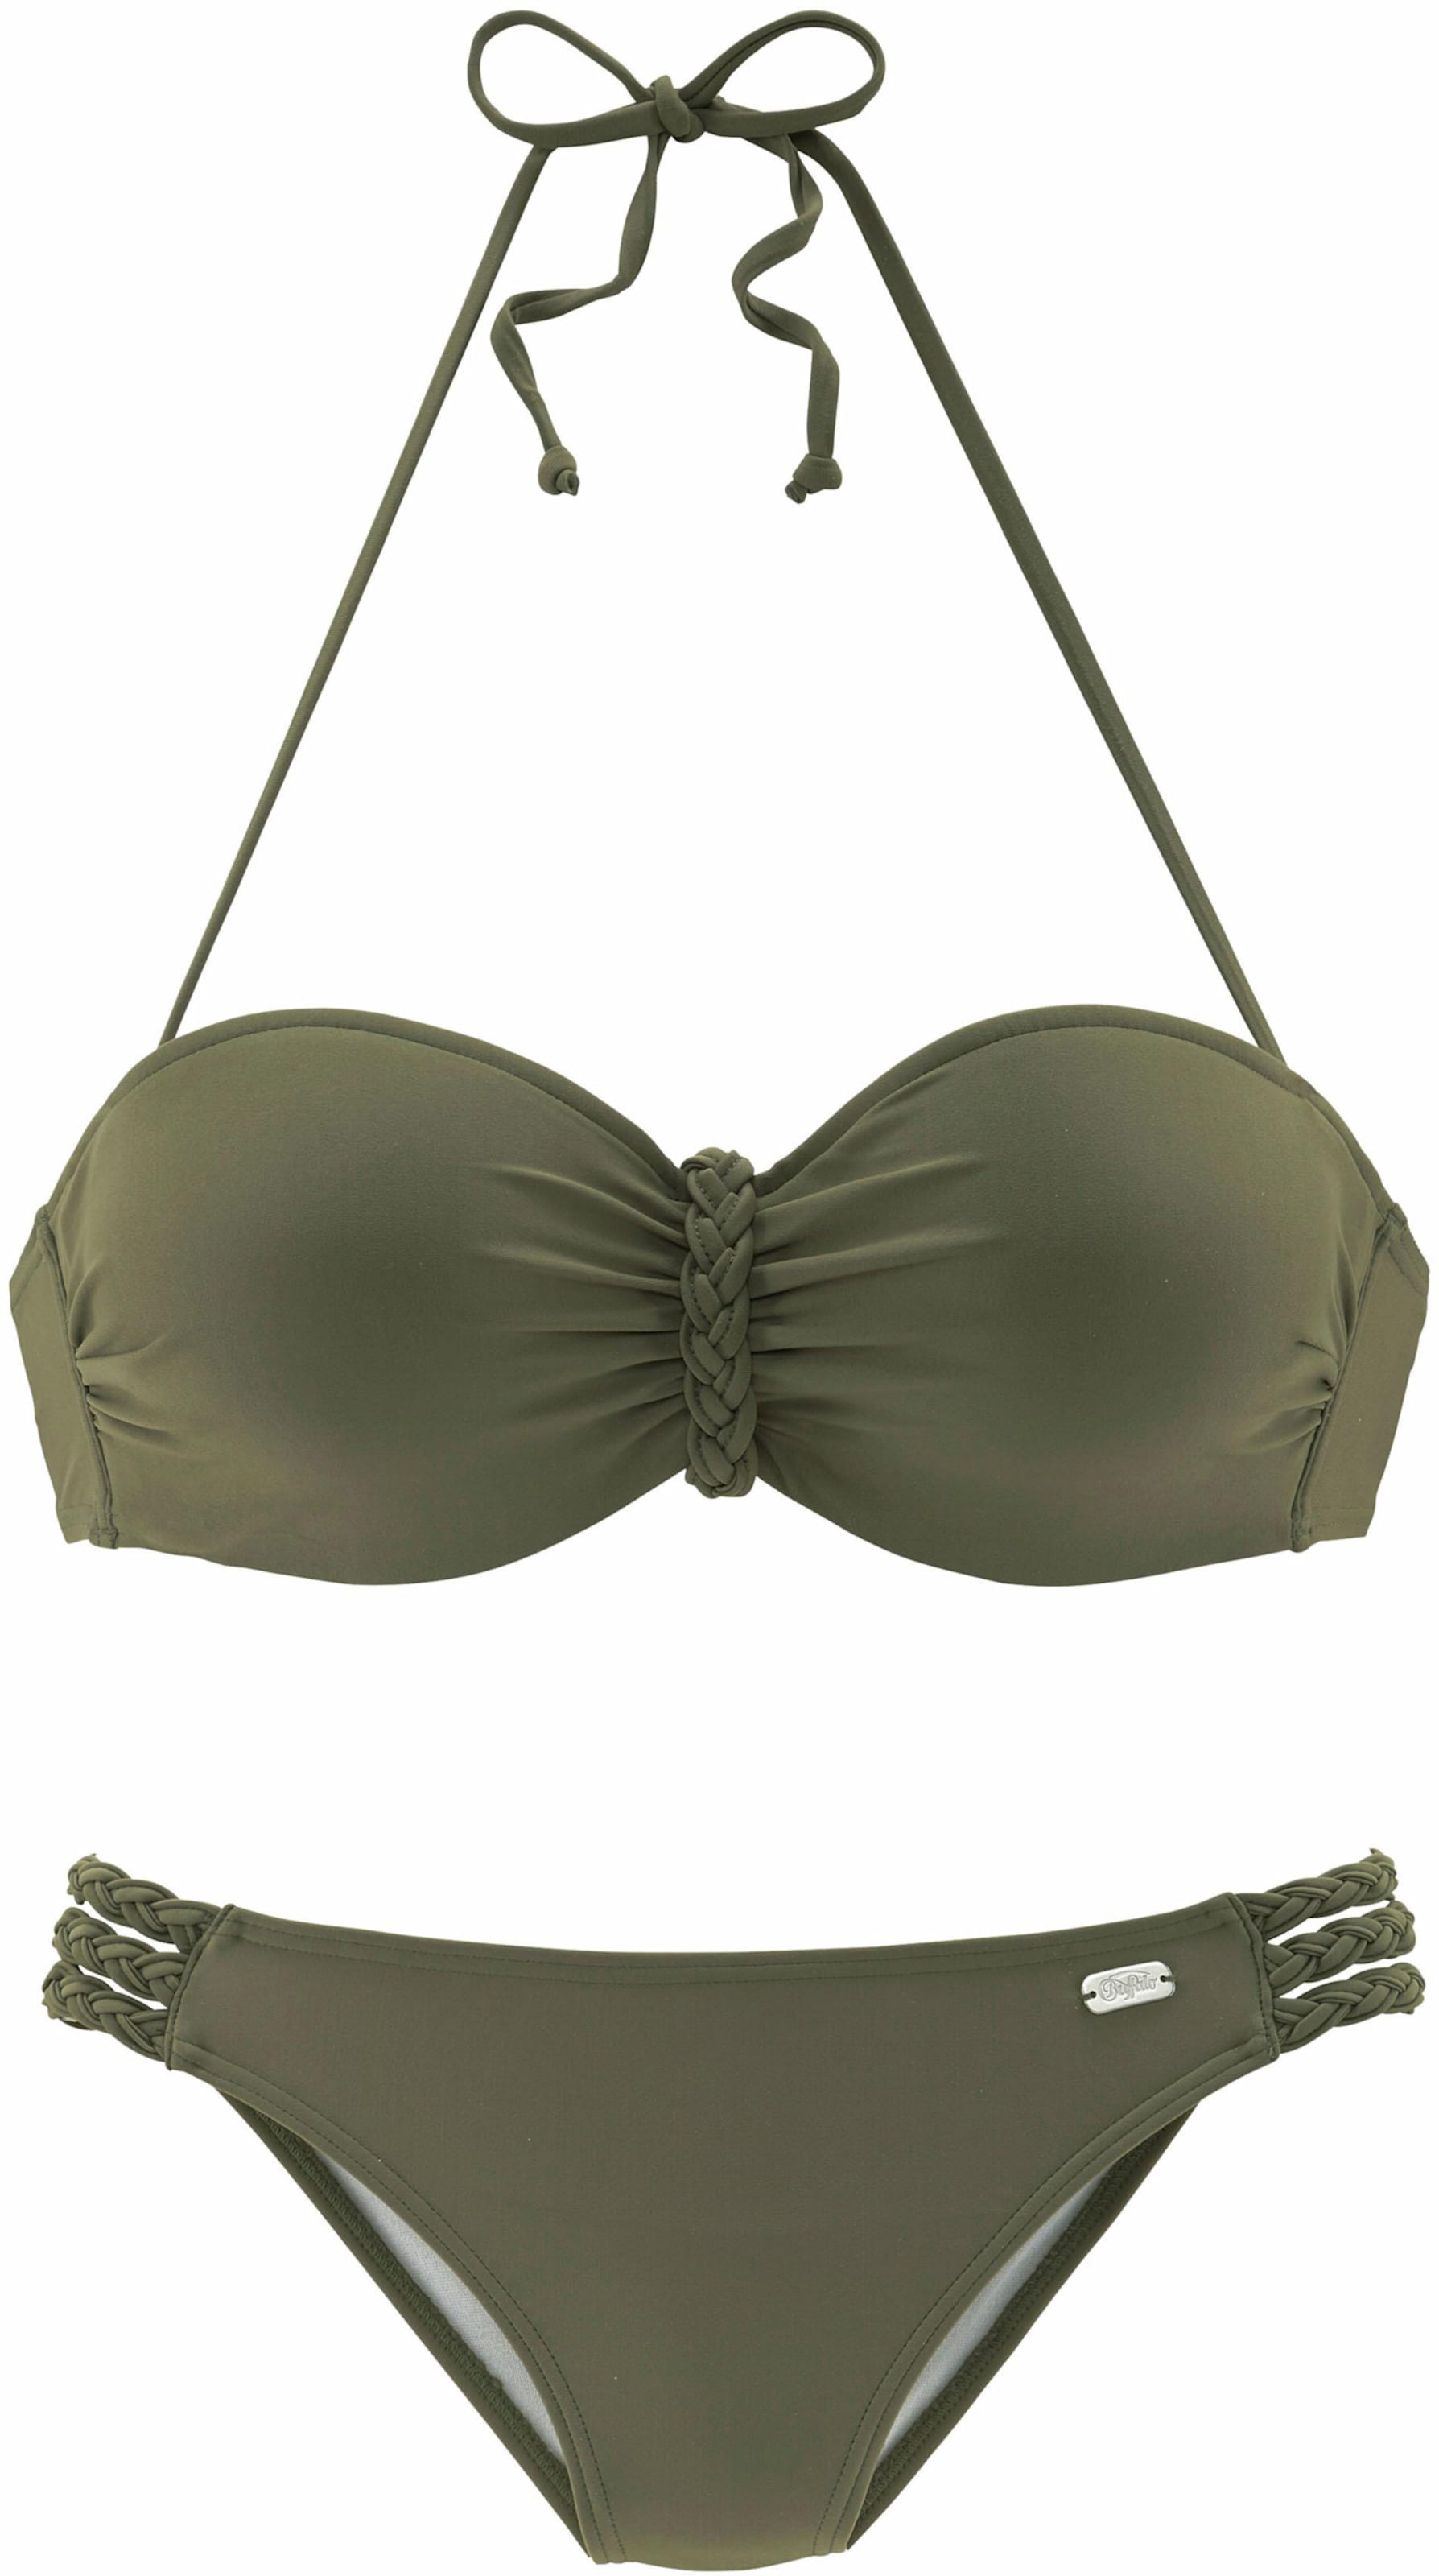 Bügel-Bandeau-Bikini in oliv von Buffalo